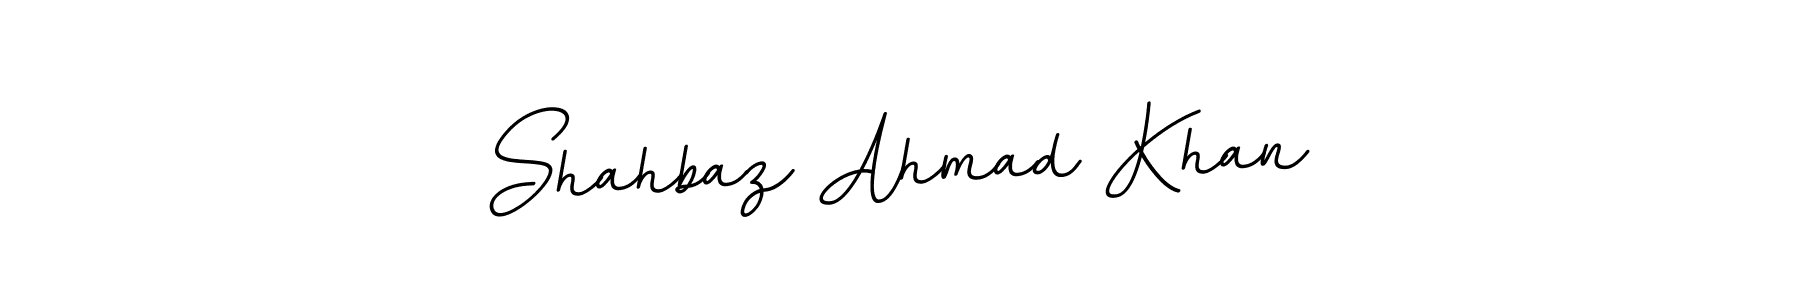 How to Draw Shahbaz Ahmad Khan signature style? BallpointsItalic-DORy9 is a latest design signature styles for name Shahbaz Ahmad Khan. Shahbaz Ahmad Khan signature style 11 images and pictures png